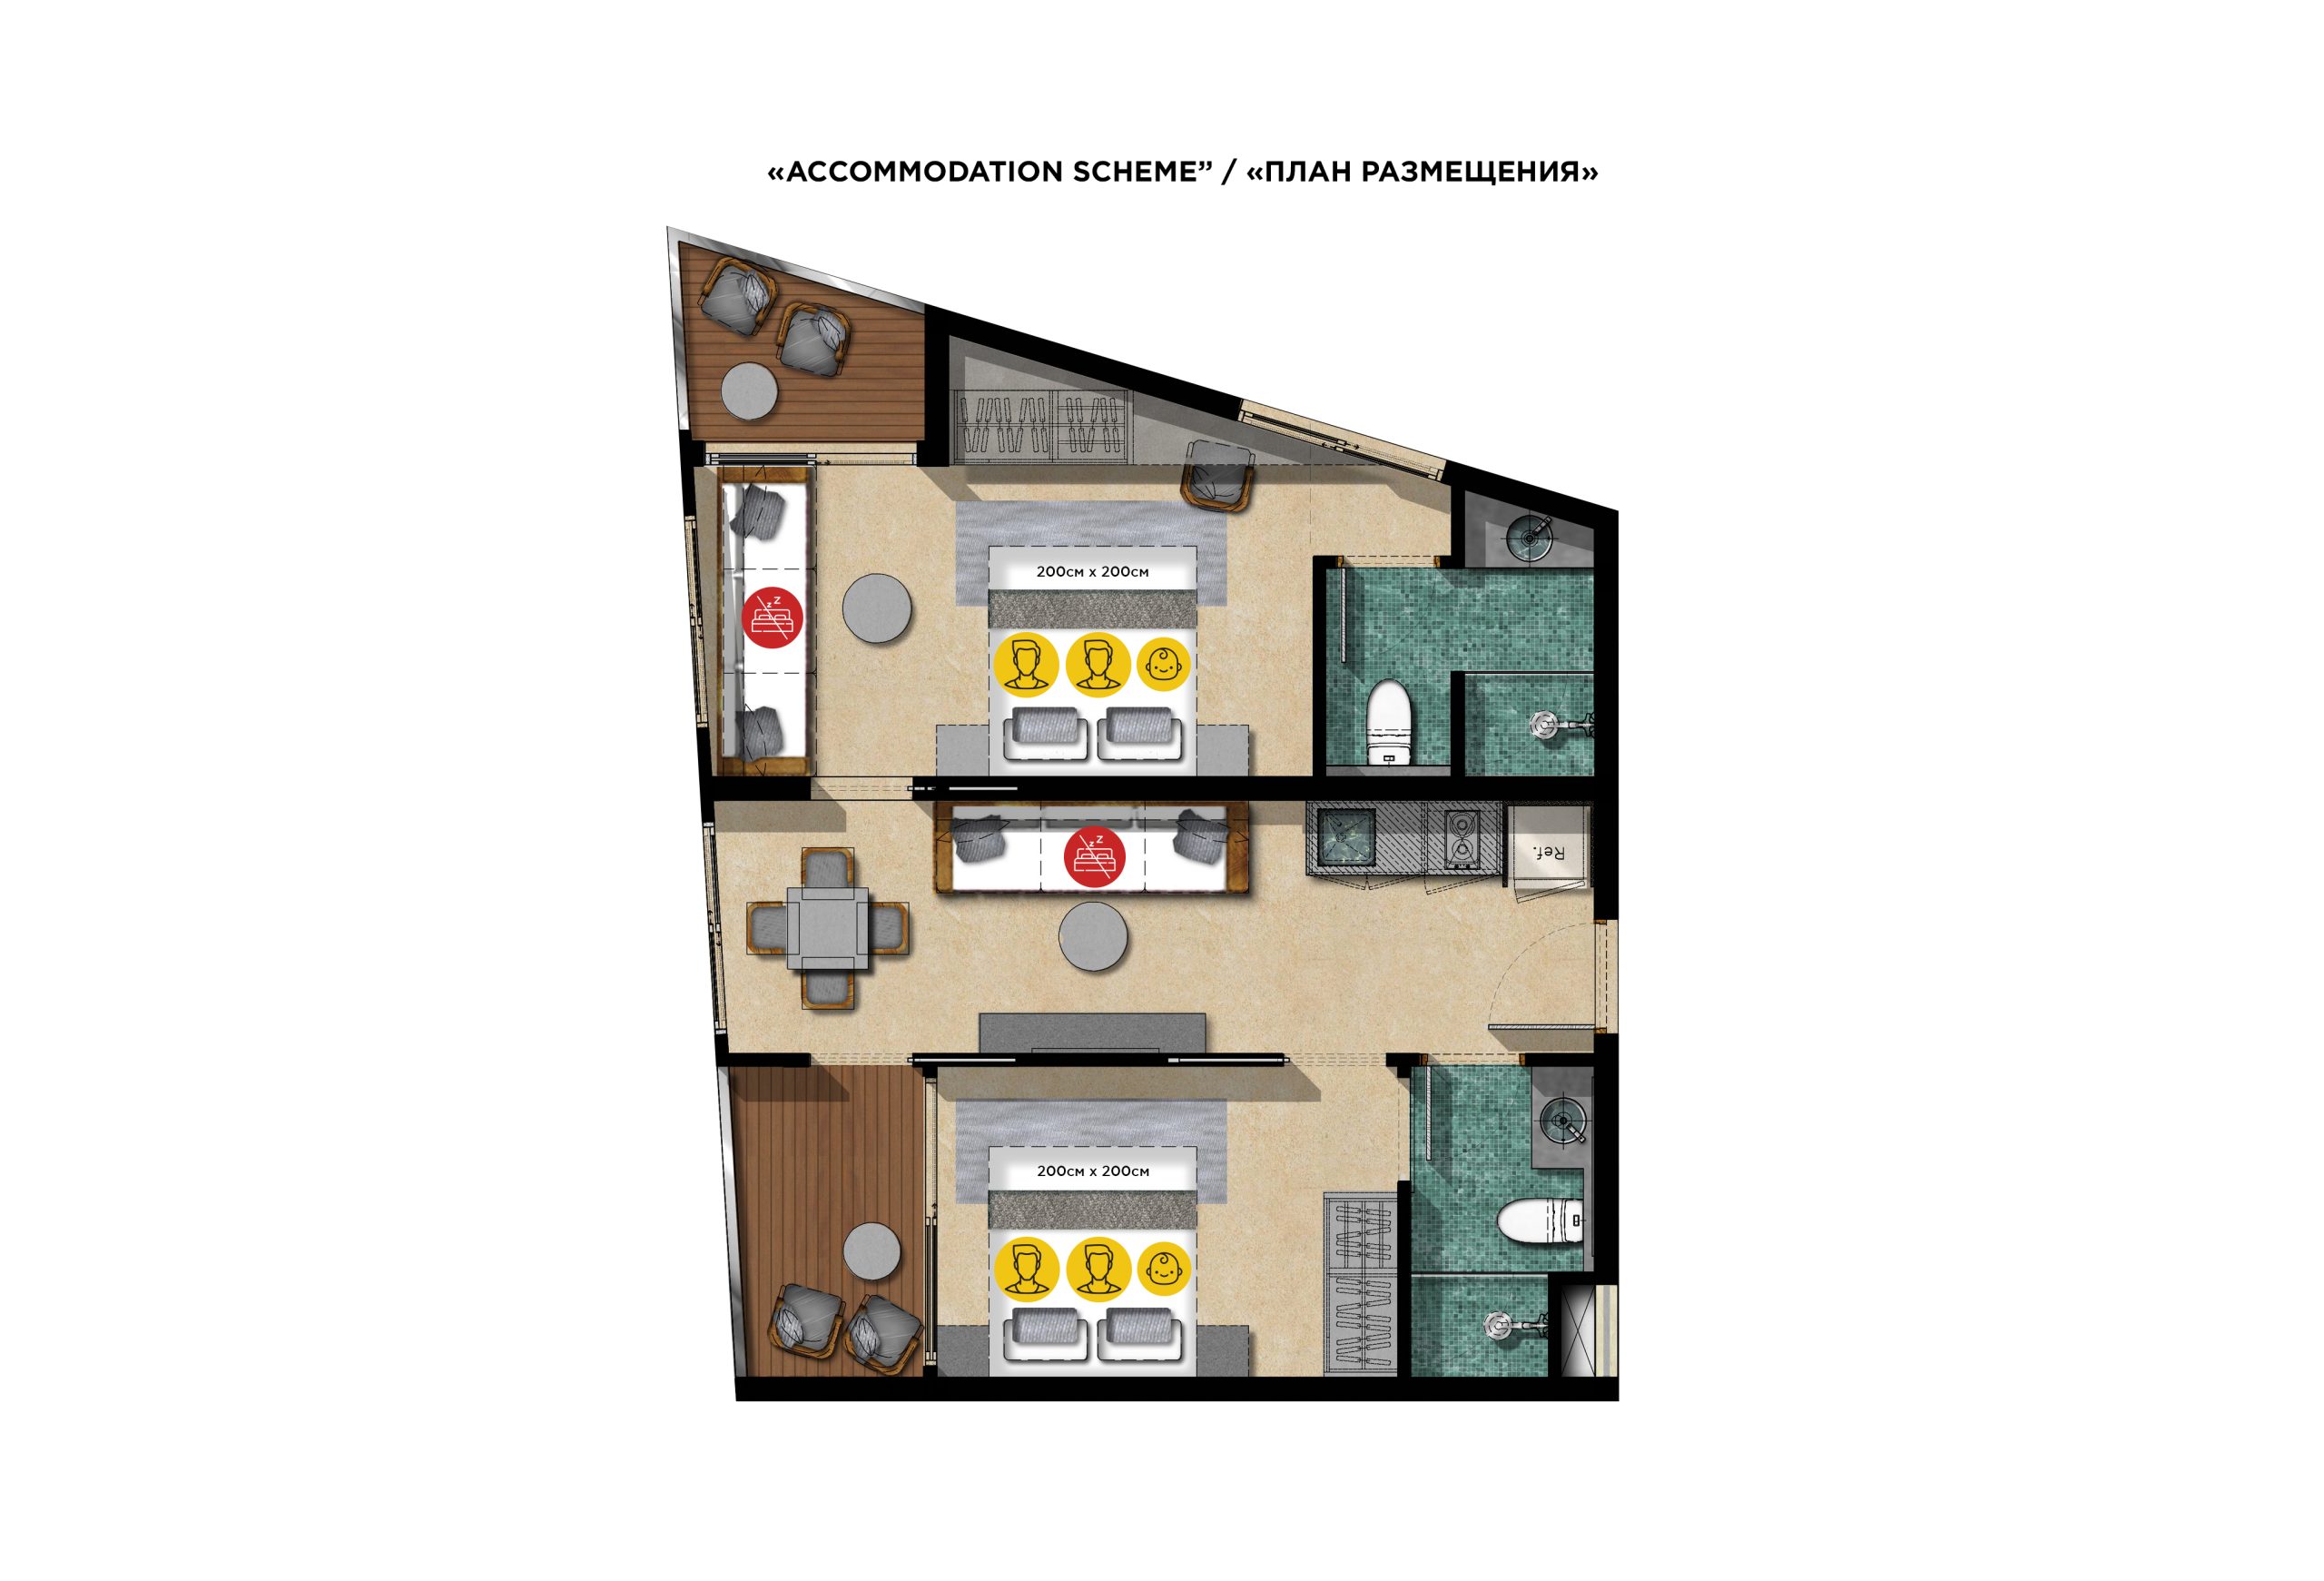 Accommodation plan